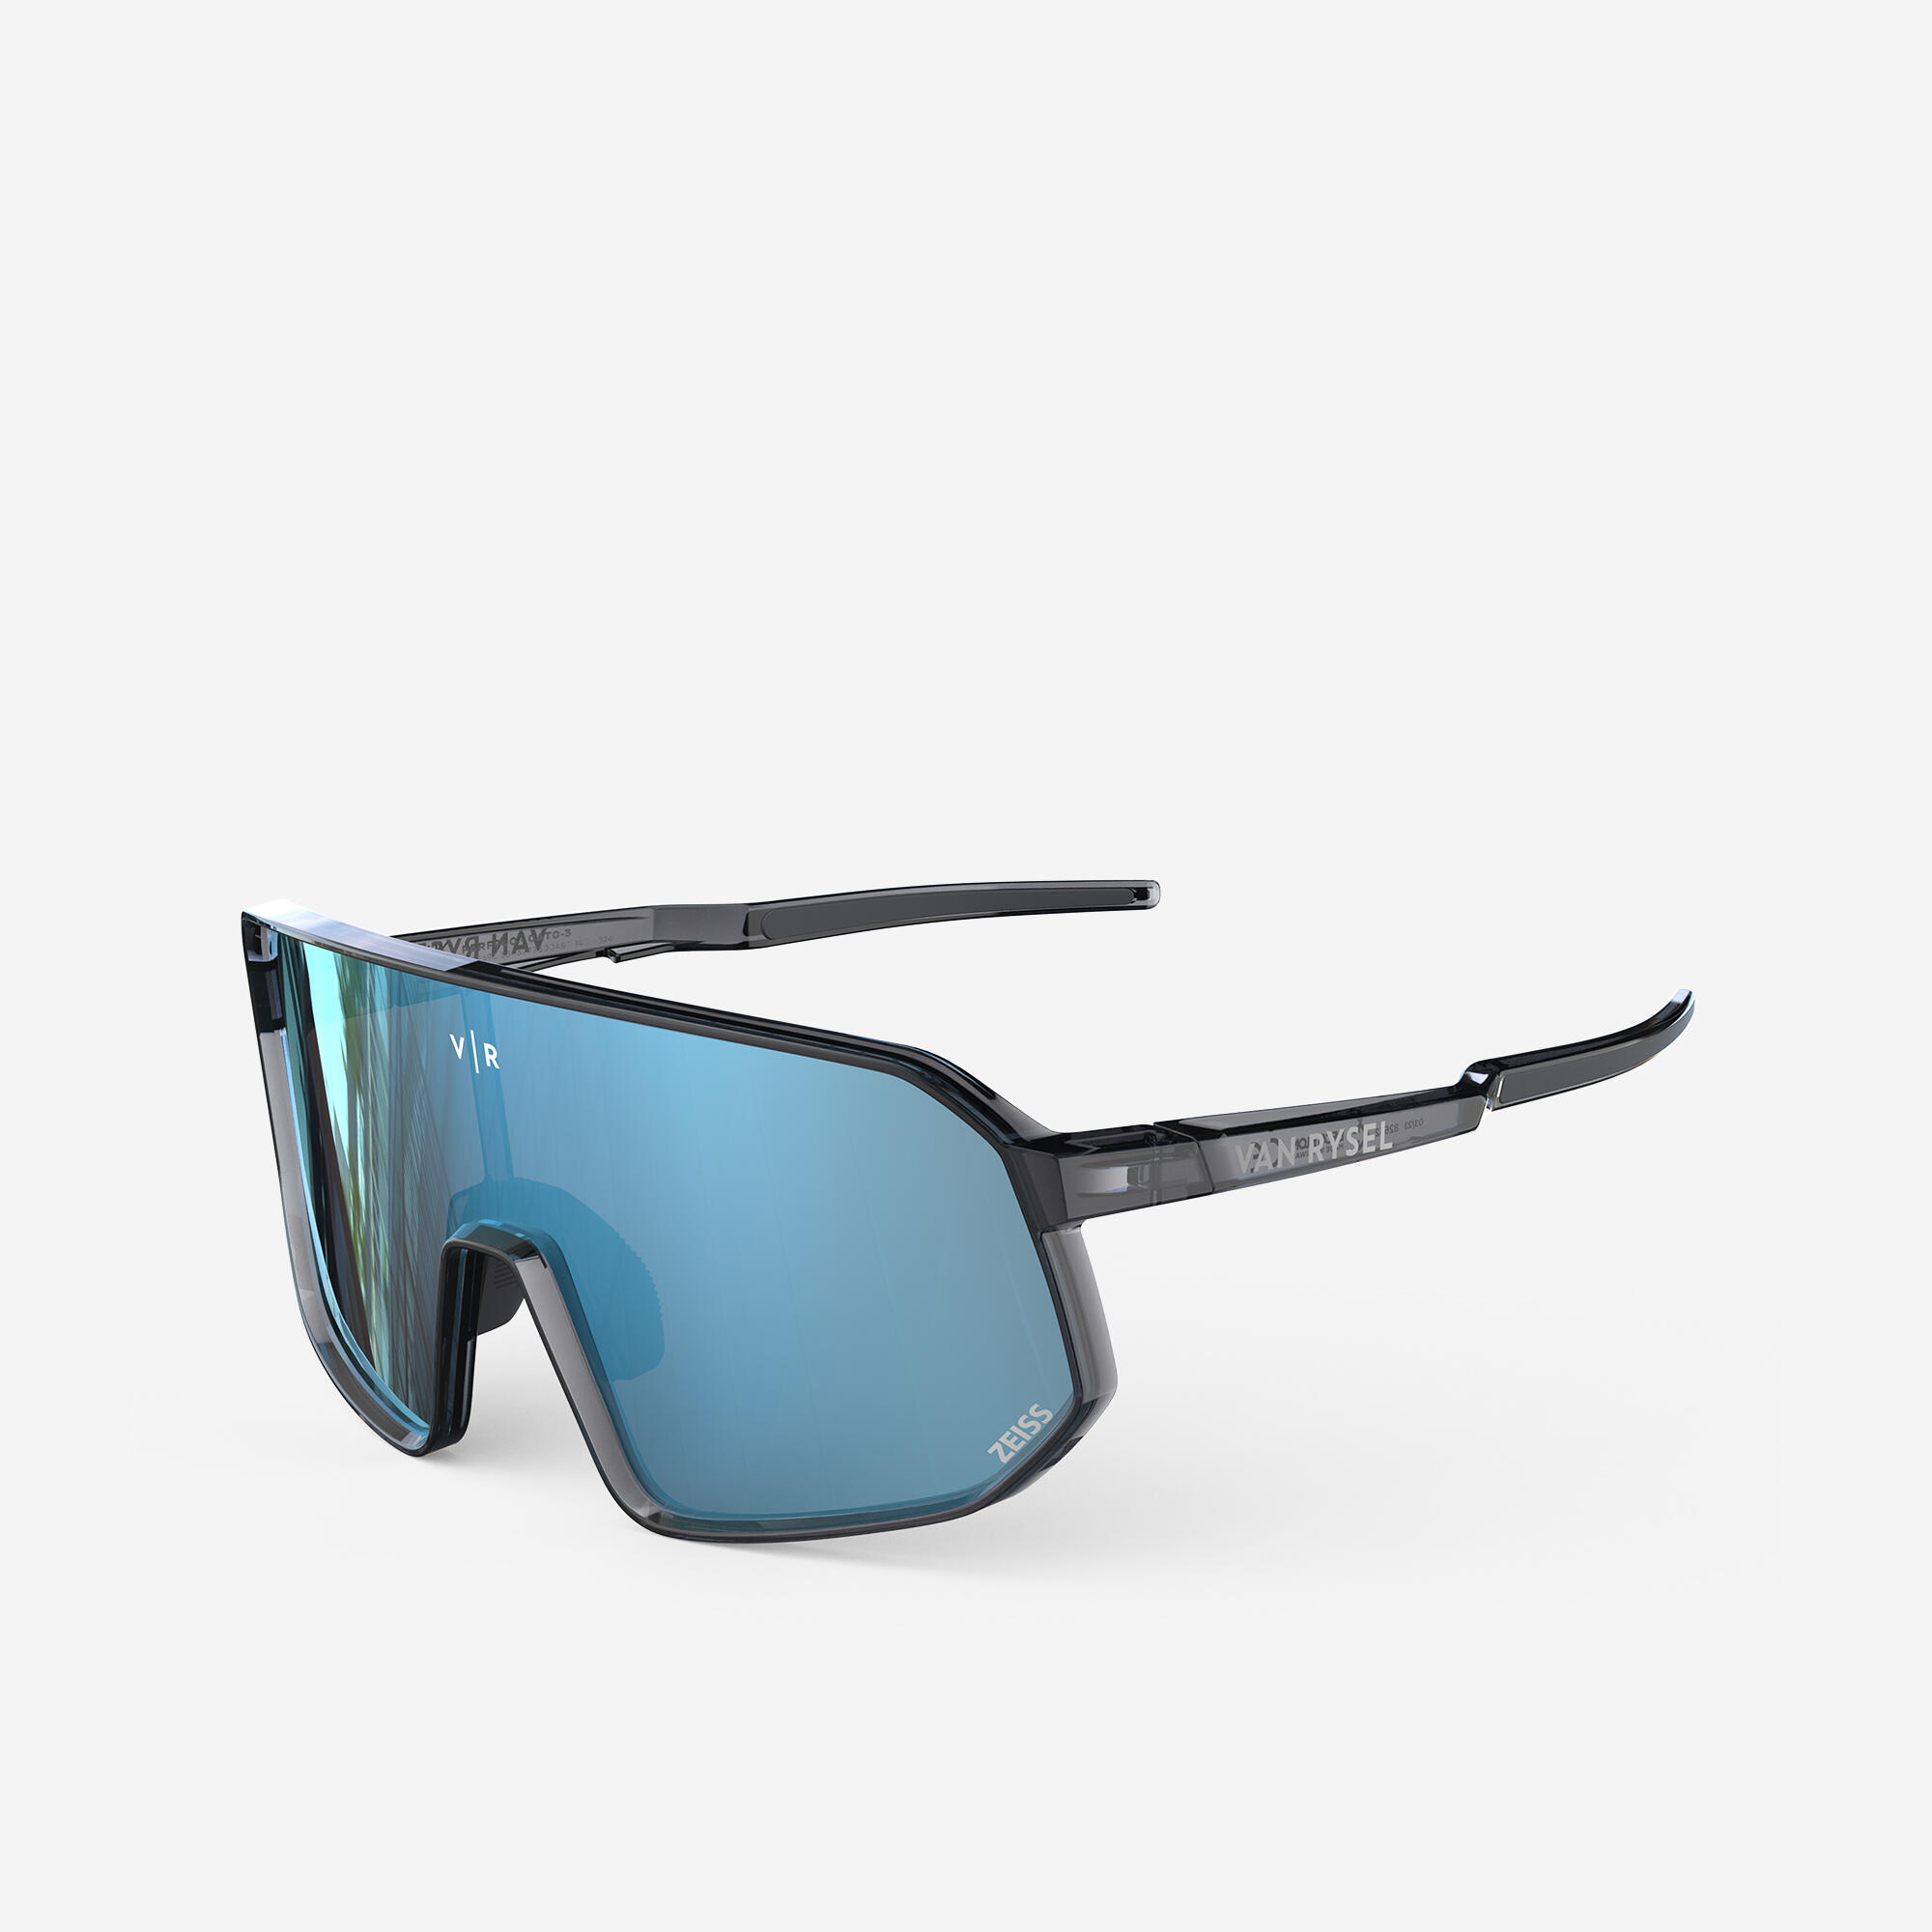 Sunglasses RoadR 900 Perf Light Pack - Grey / Translucent 1/6